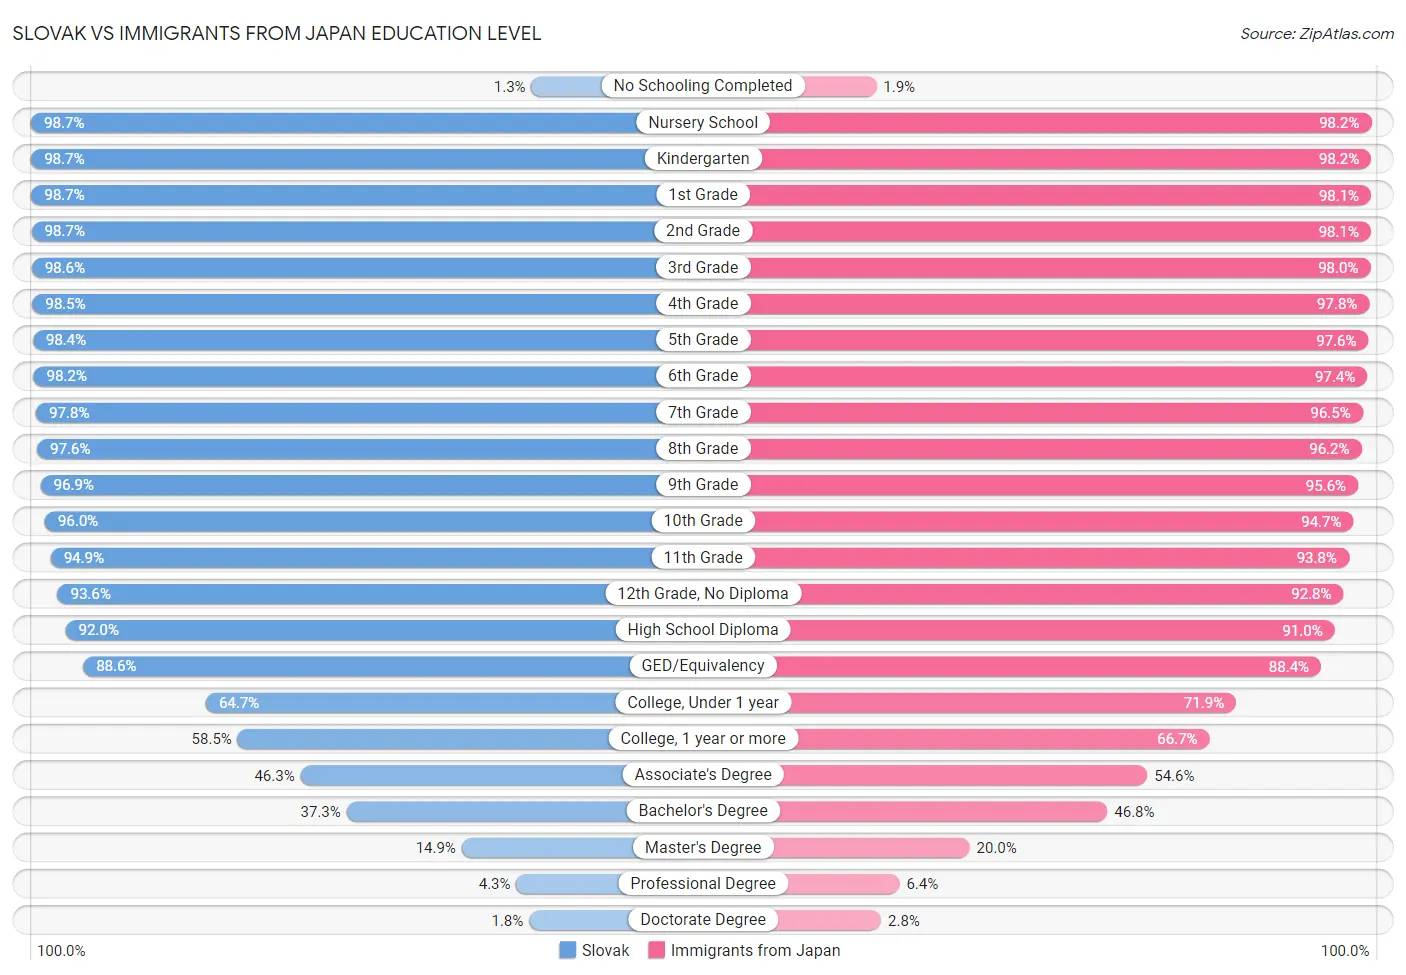 Slovak vs Immigrants from Japan Education Level